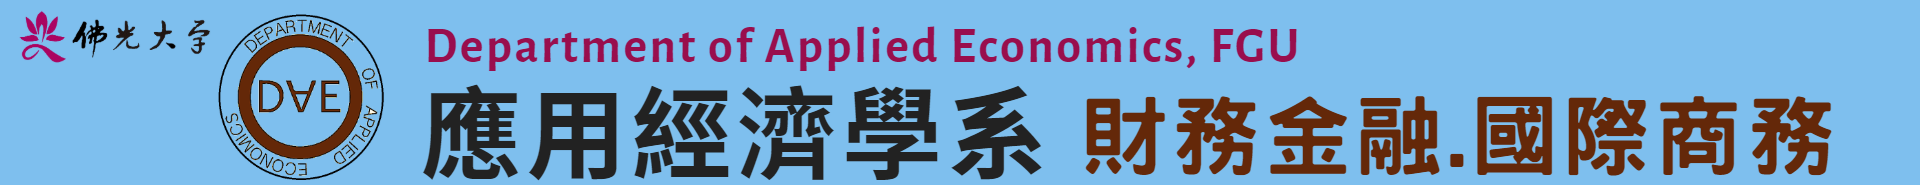 佛光大學應用經濟學系 Department of Applied Economics,FGU 的Logo